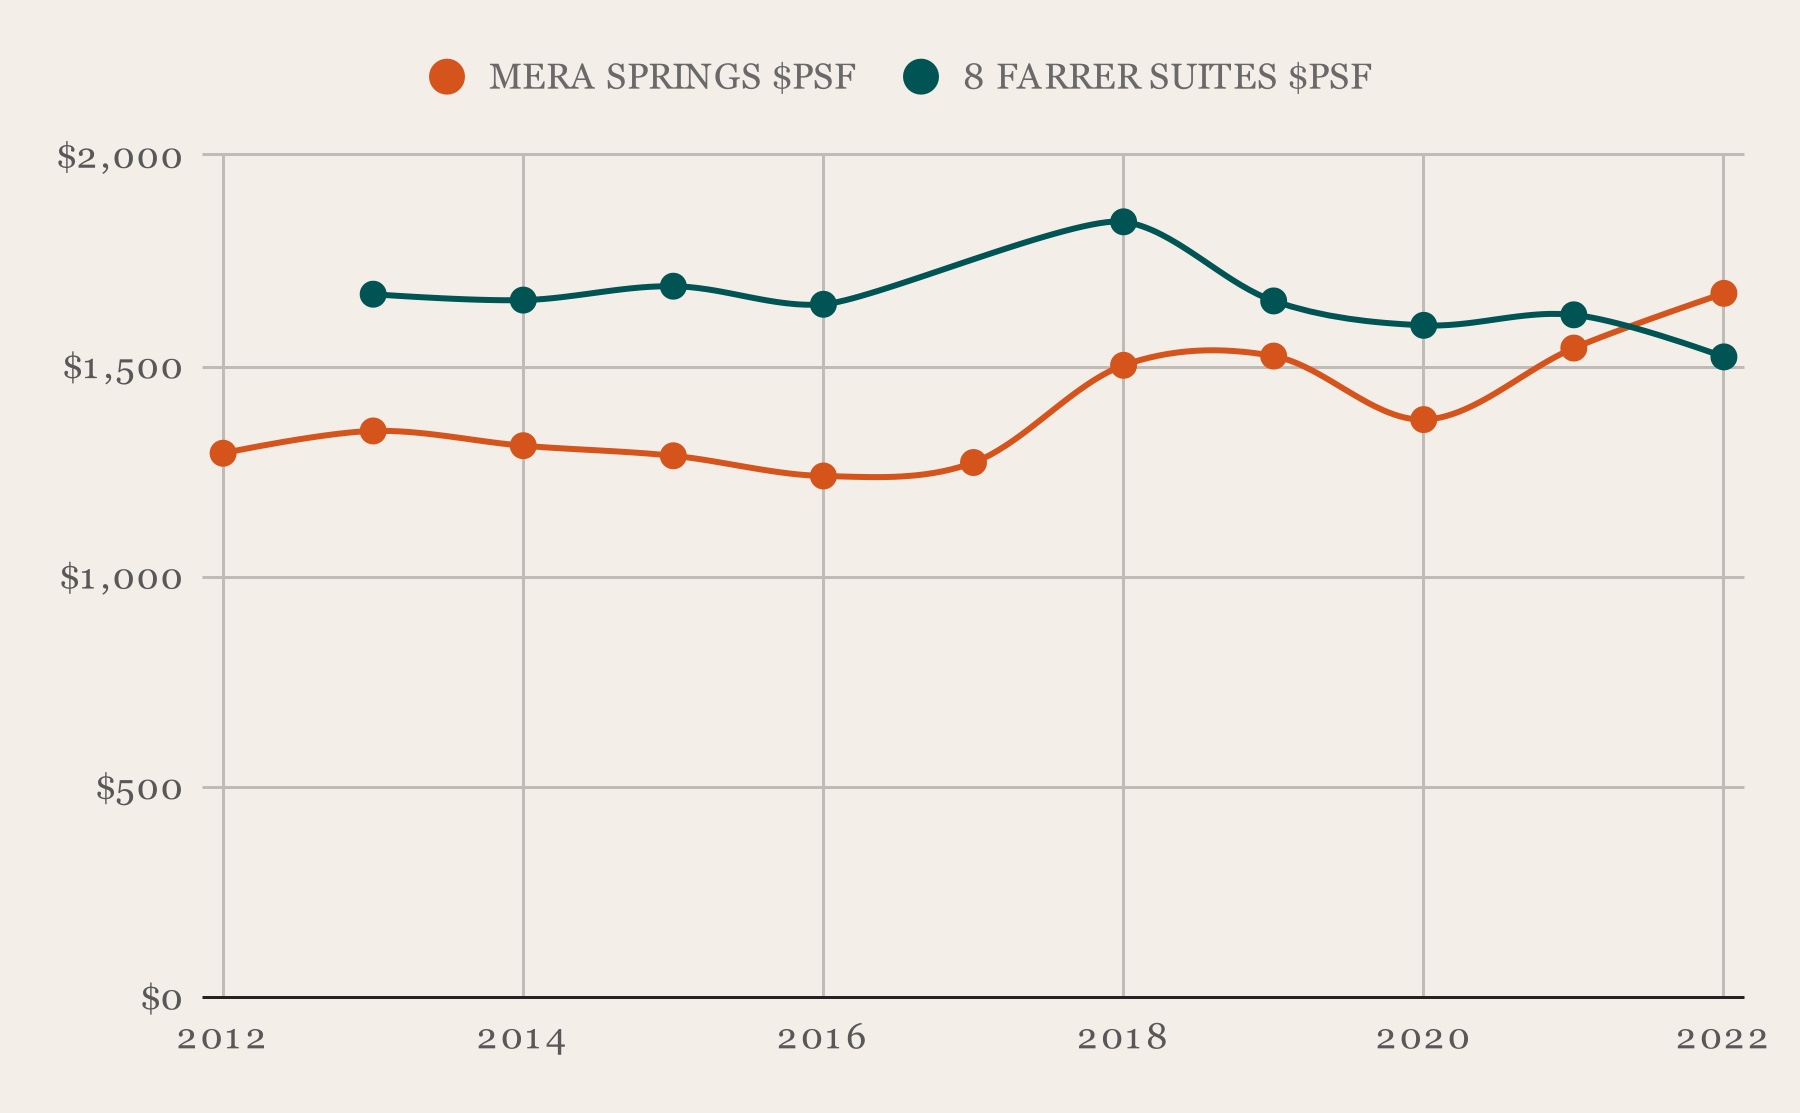 Mera Springs vs 8 Farrer Suites PSF